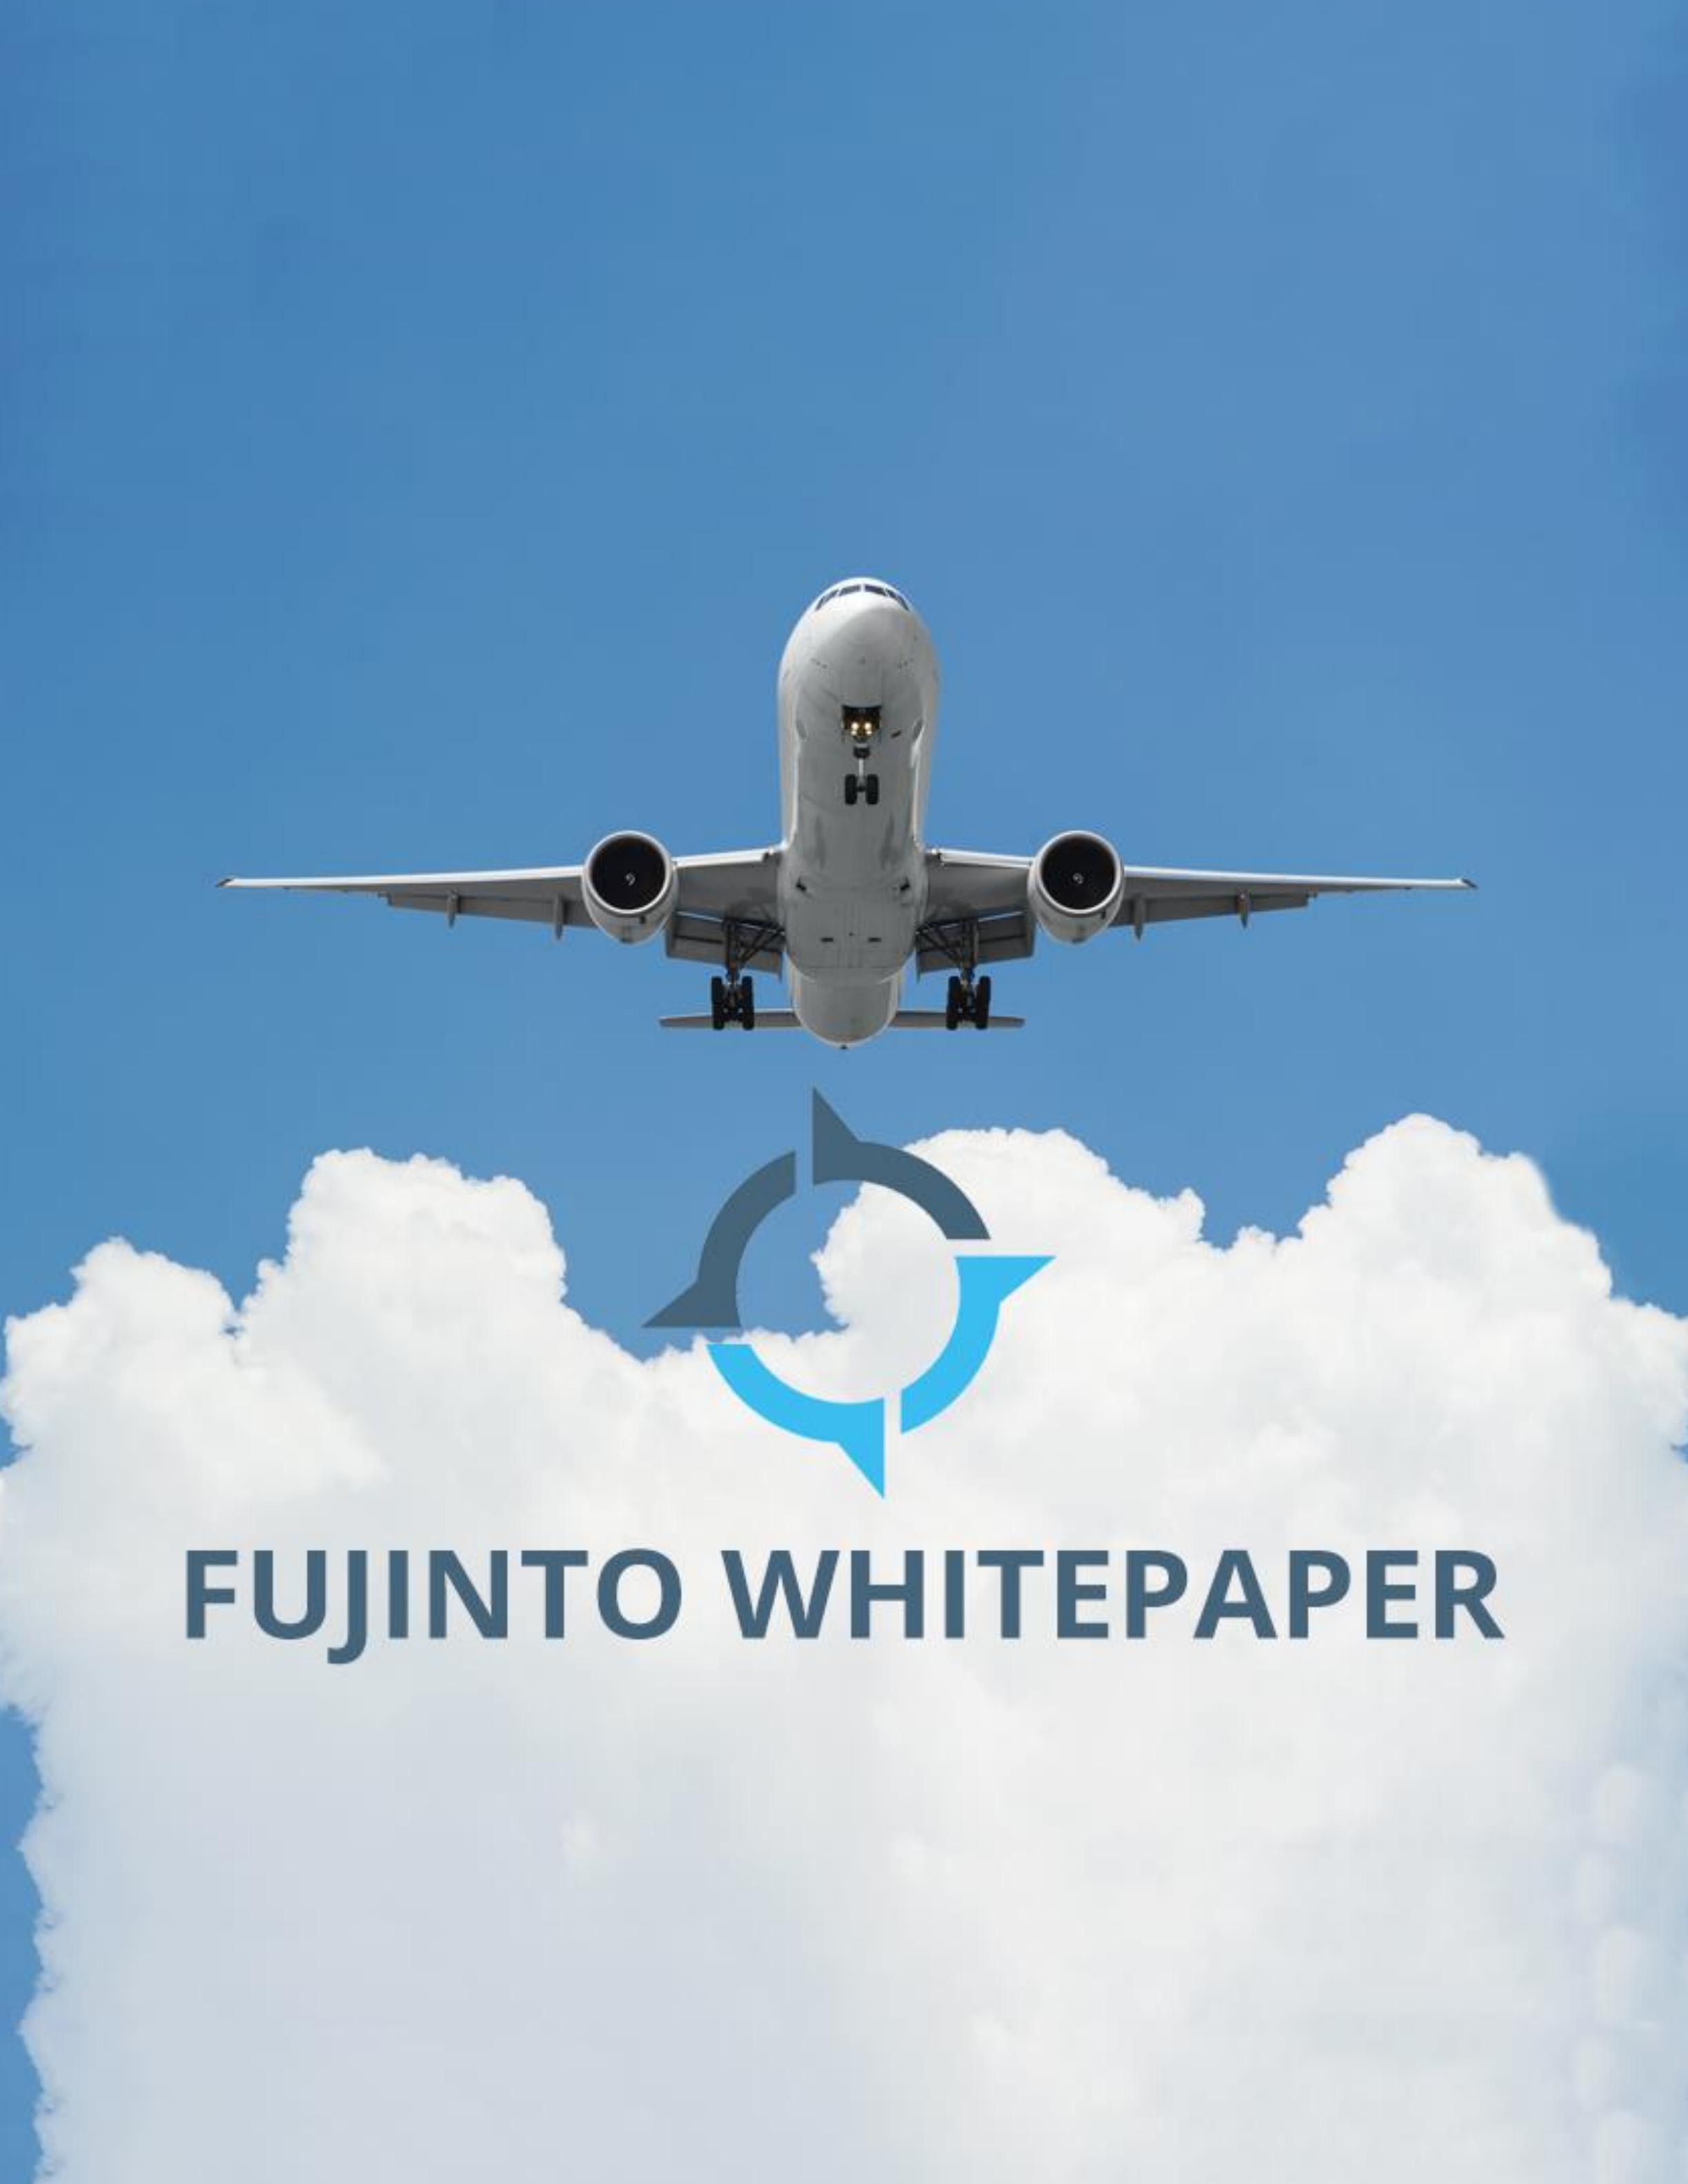 NTO_fujinto-whitepaper_00.jpg